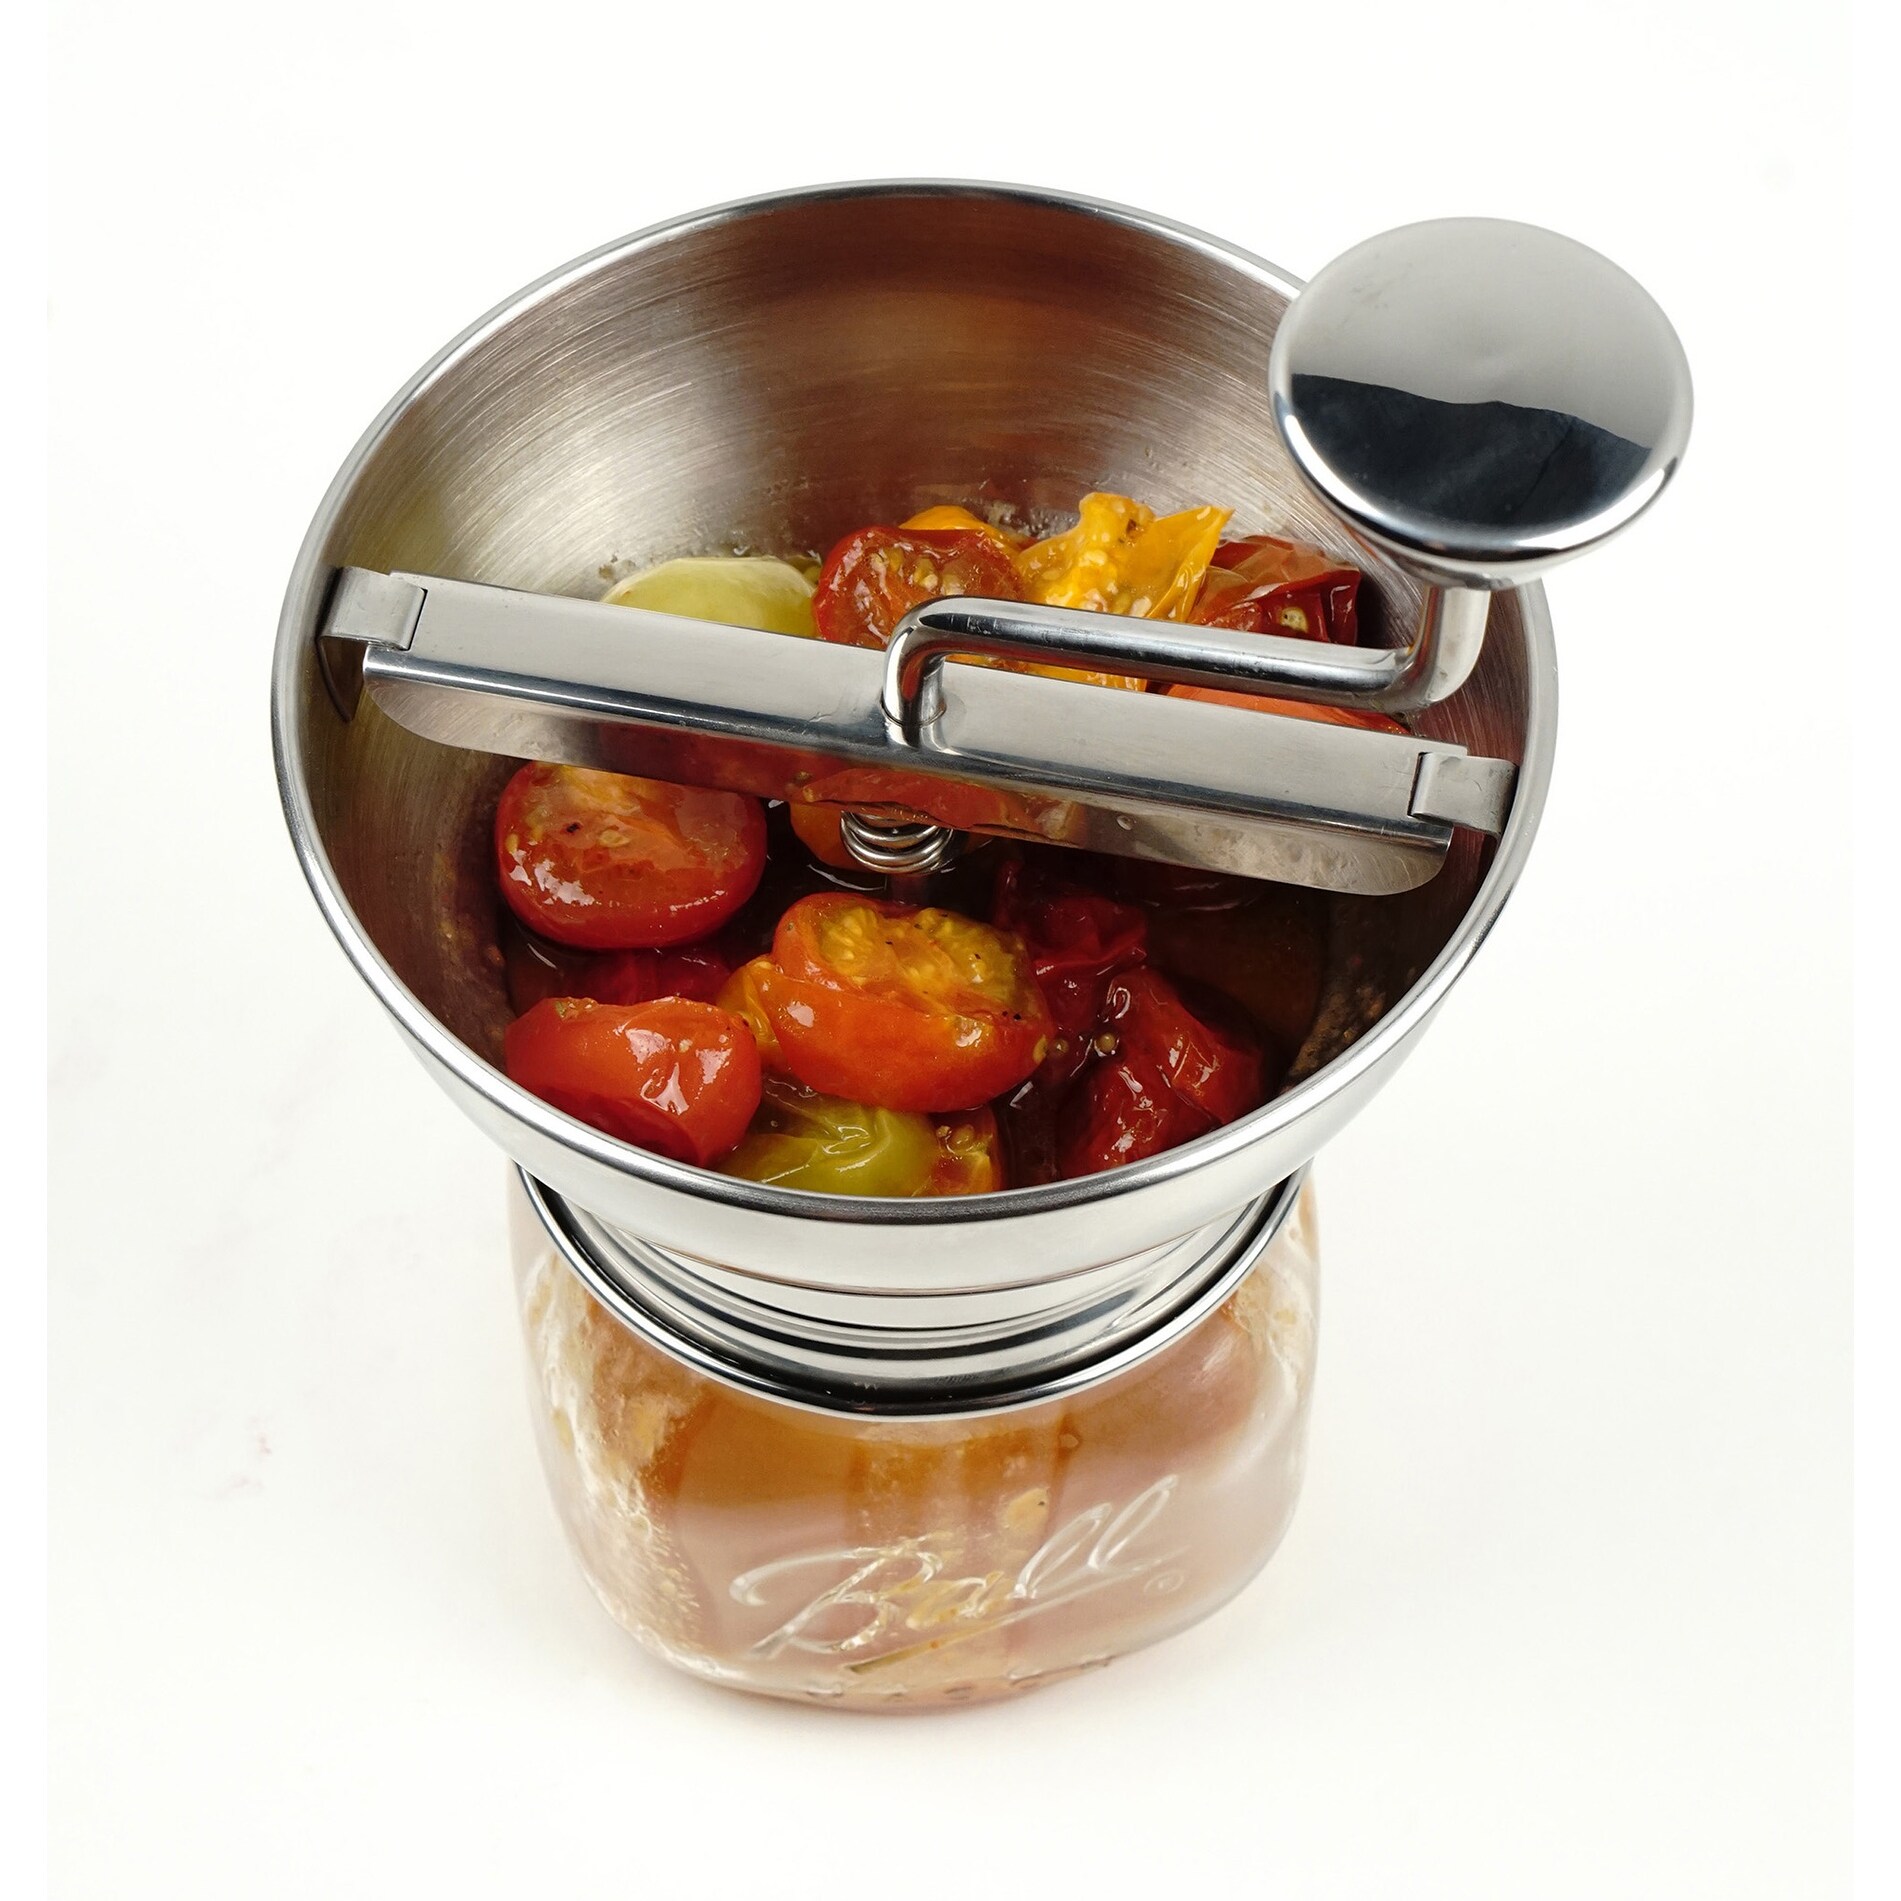 Kitchen Vegetable Chopper 13-in-1 Food Cutter + FREE 4-in-1 Jar Opener -  household items - by owner - housewares sale